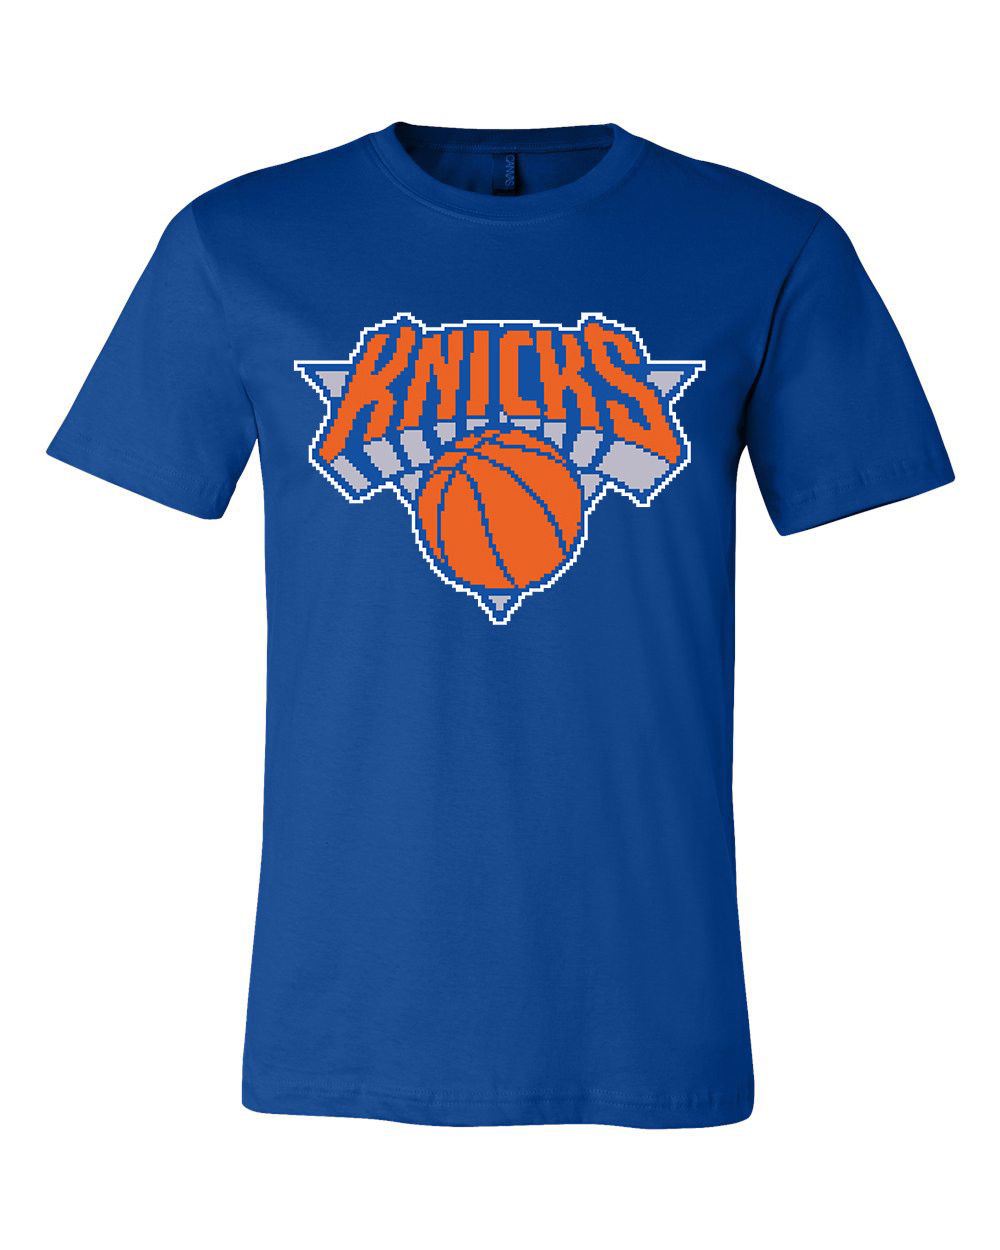 New York Knicks 8 bit retro tecmo logo T shirt